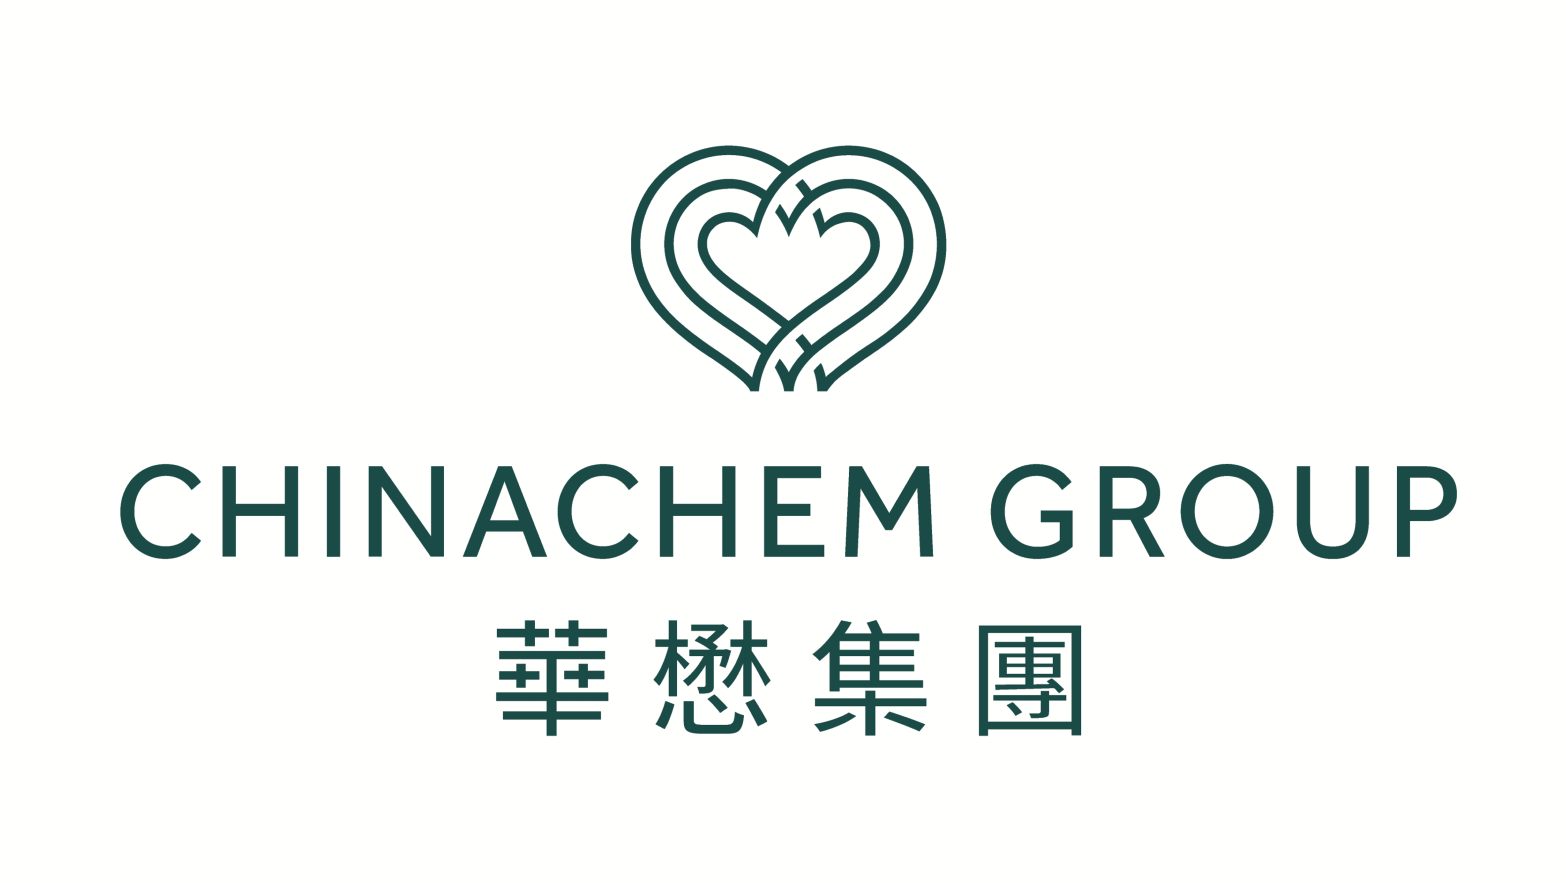 Logo_Chinachem Group CMYK